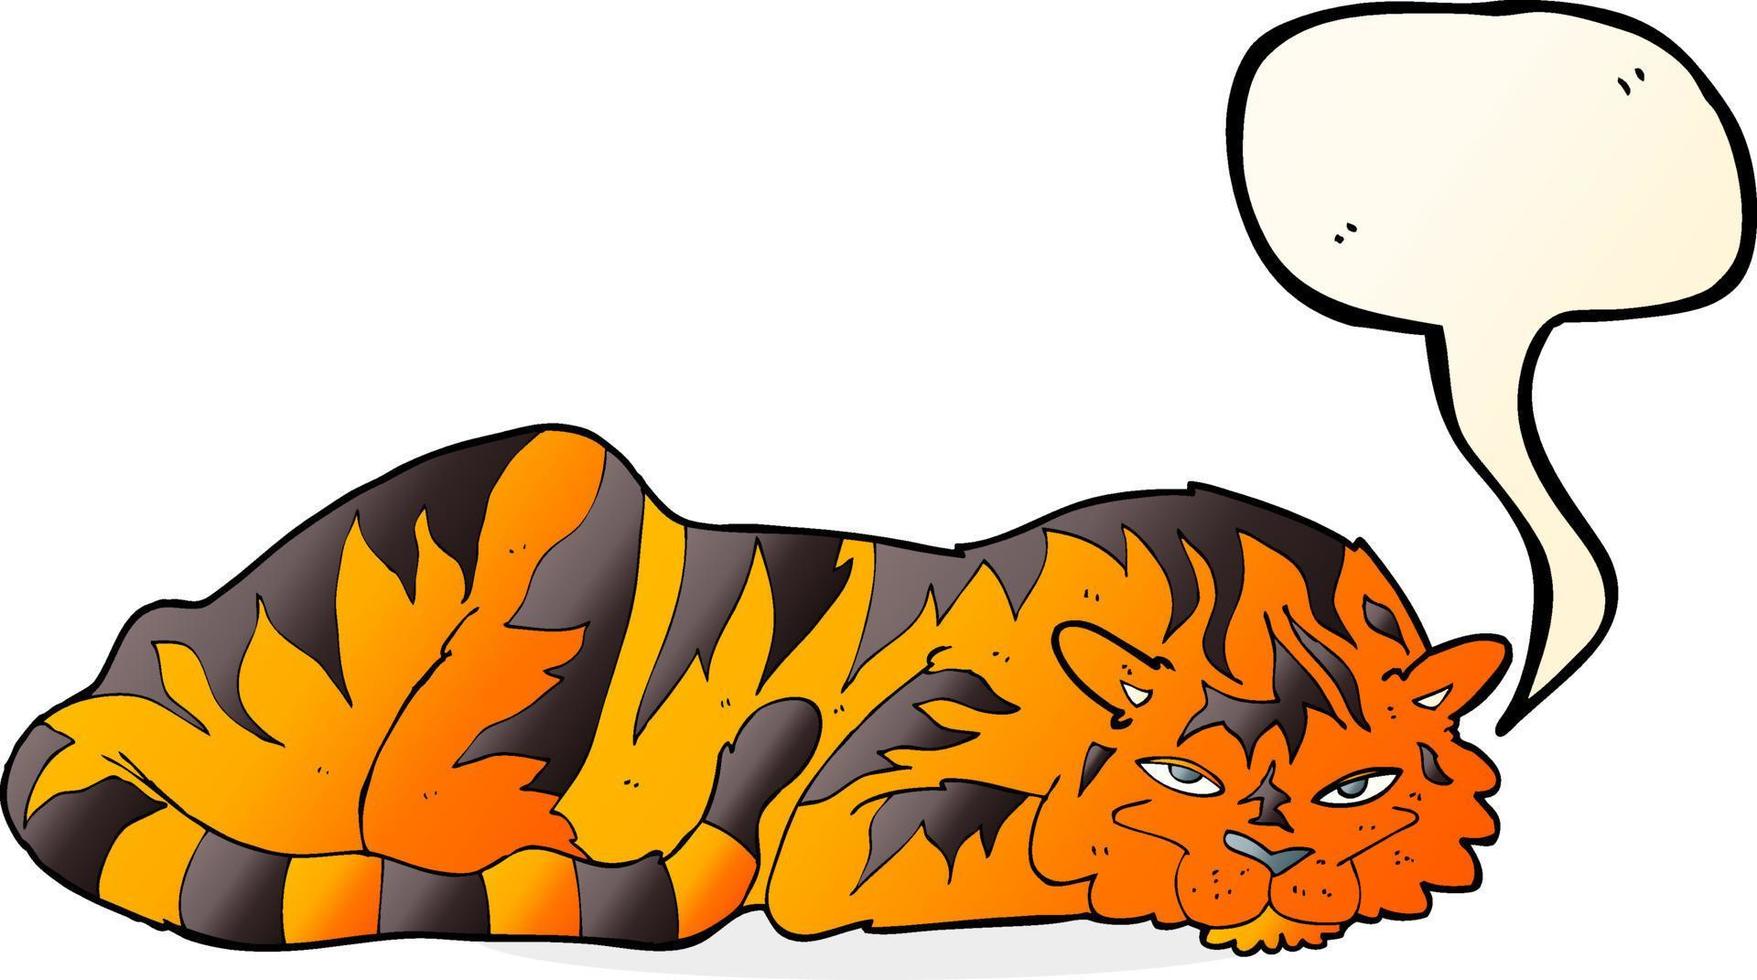 dessin animé tigre au repos avec bulle de dialogue vecteur